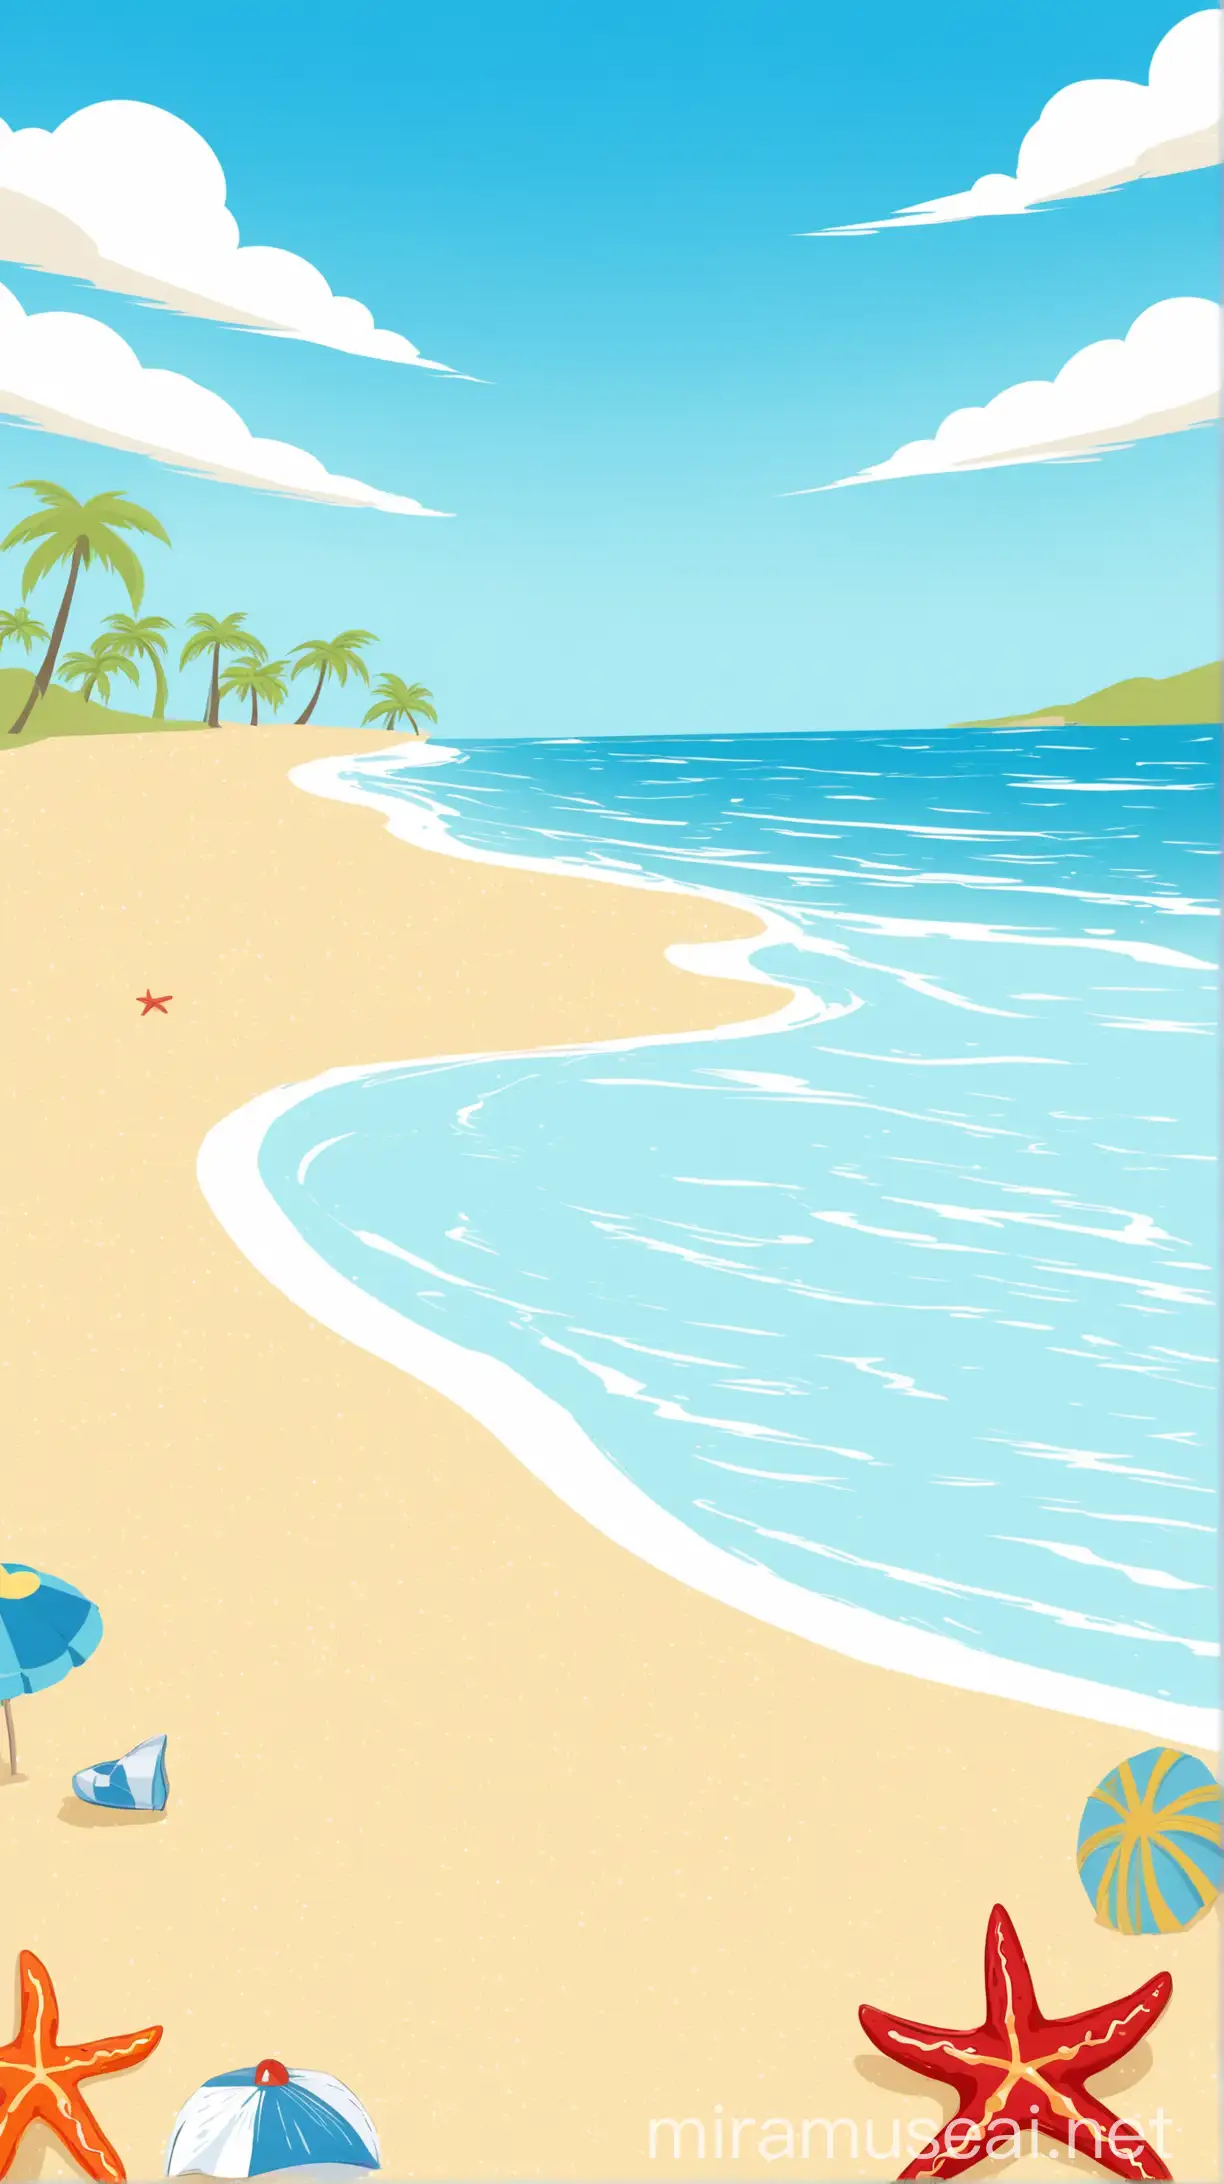 beach background cartoonish with blue sky